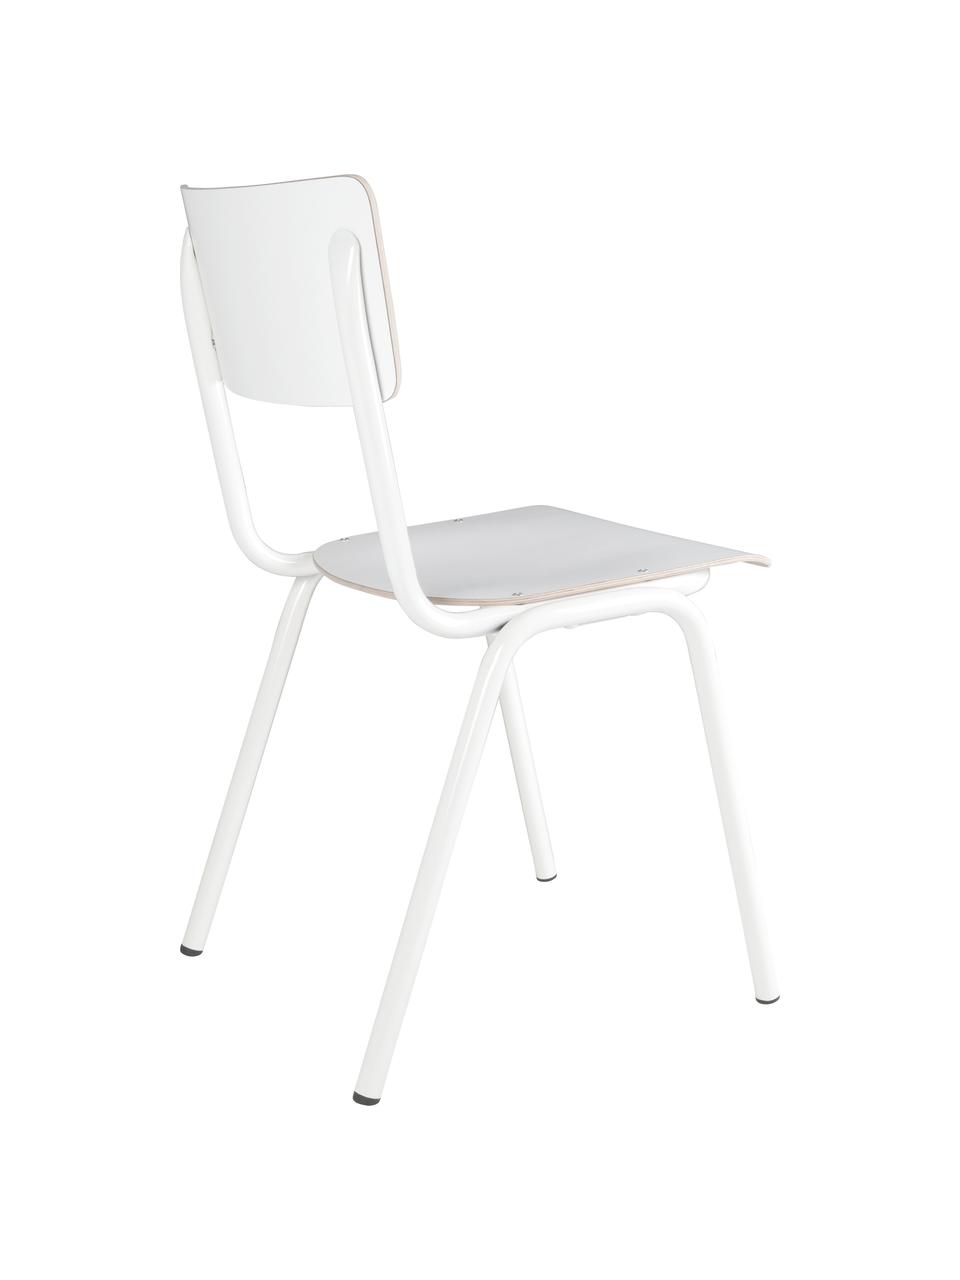 Stühle Back to School, 4 Stück, Sitzfläche: Laminat, Weiss, B 43 x T 47 cm